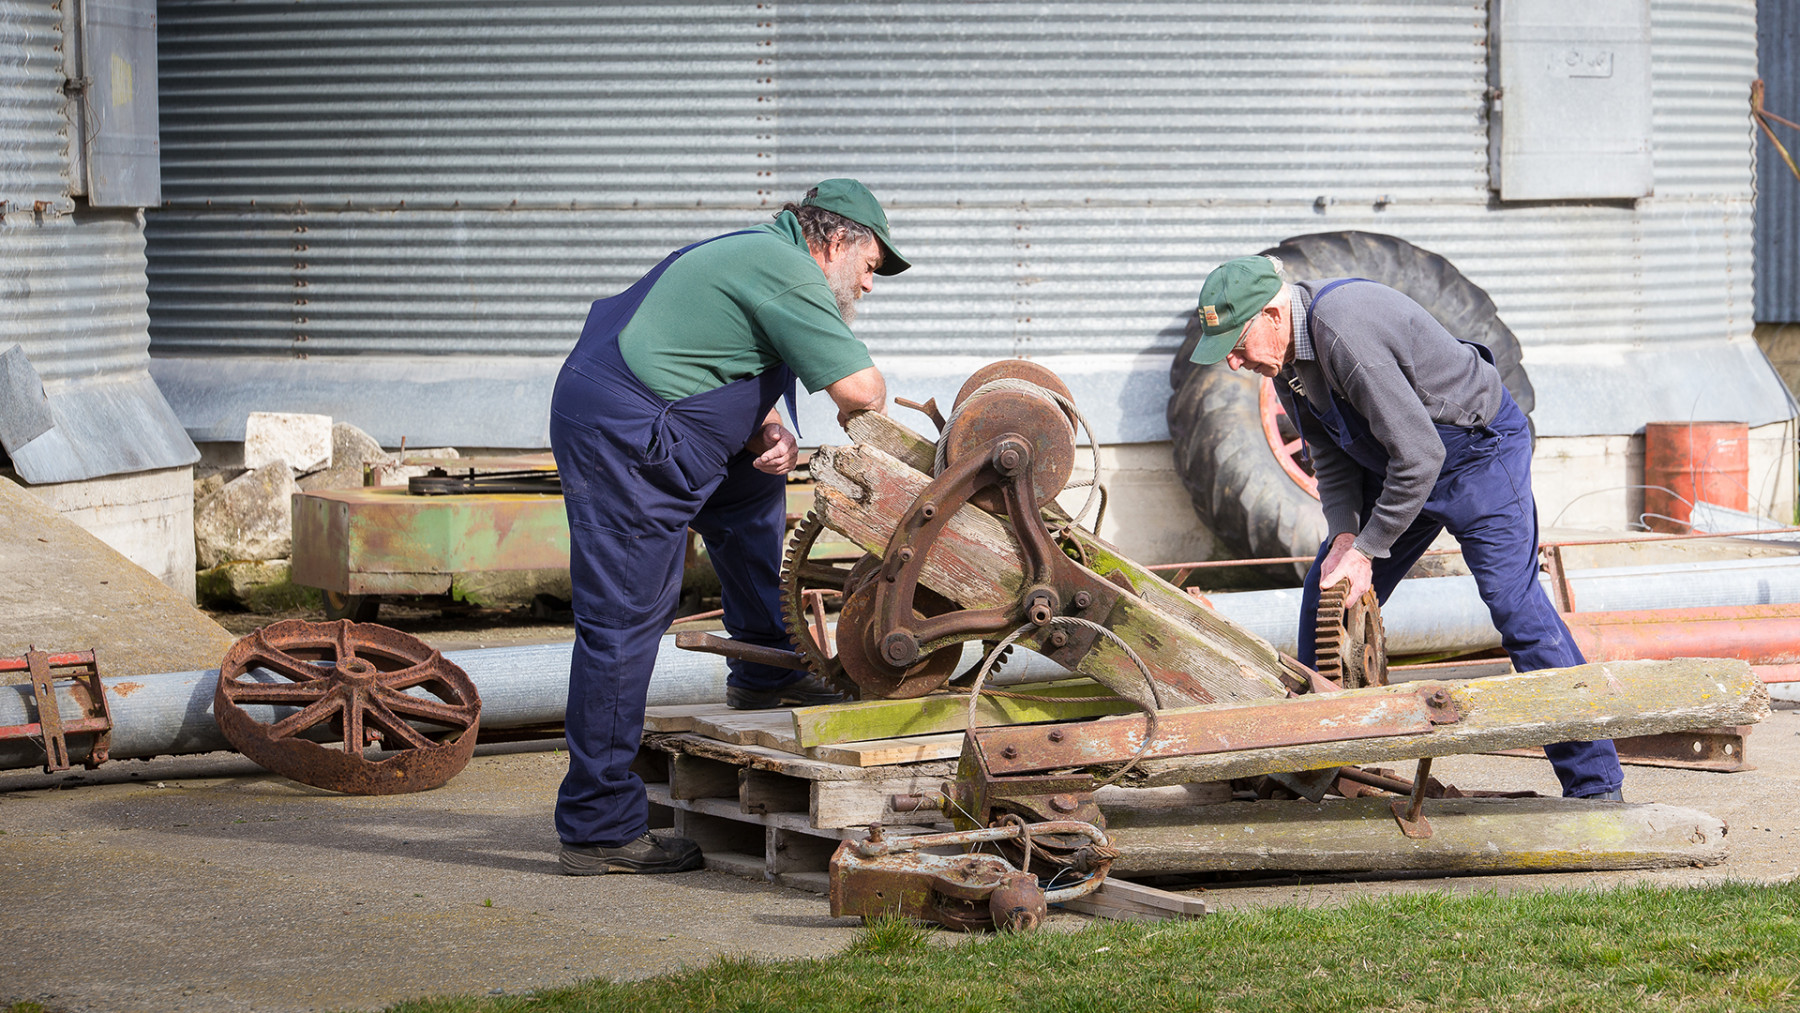 Two men work on restoring equipment for the mill